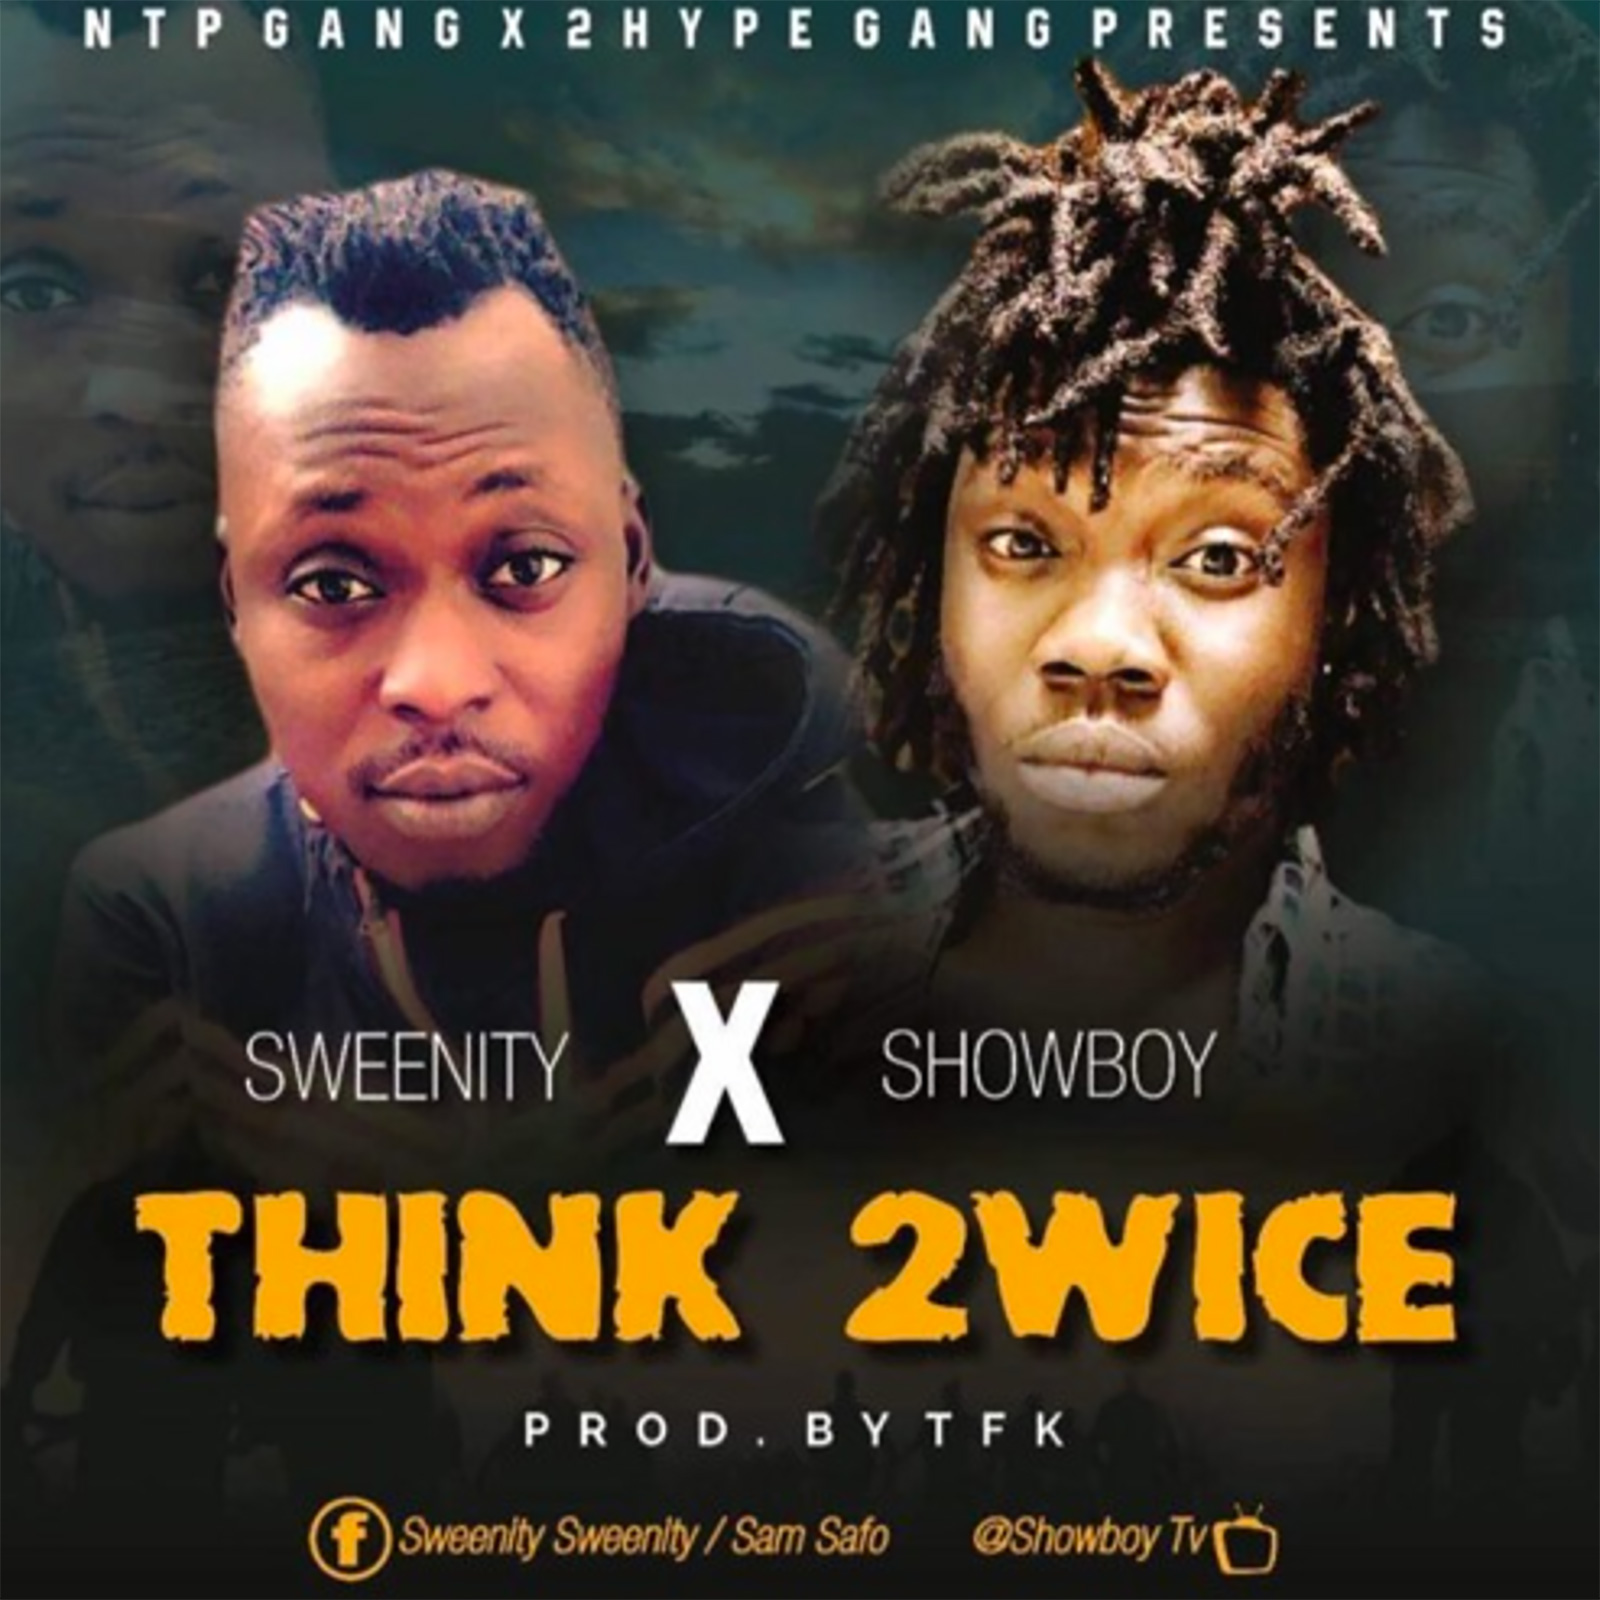 Think Twice by Sweenity feat. Showboy